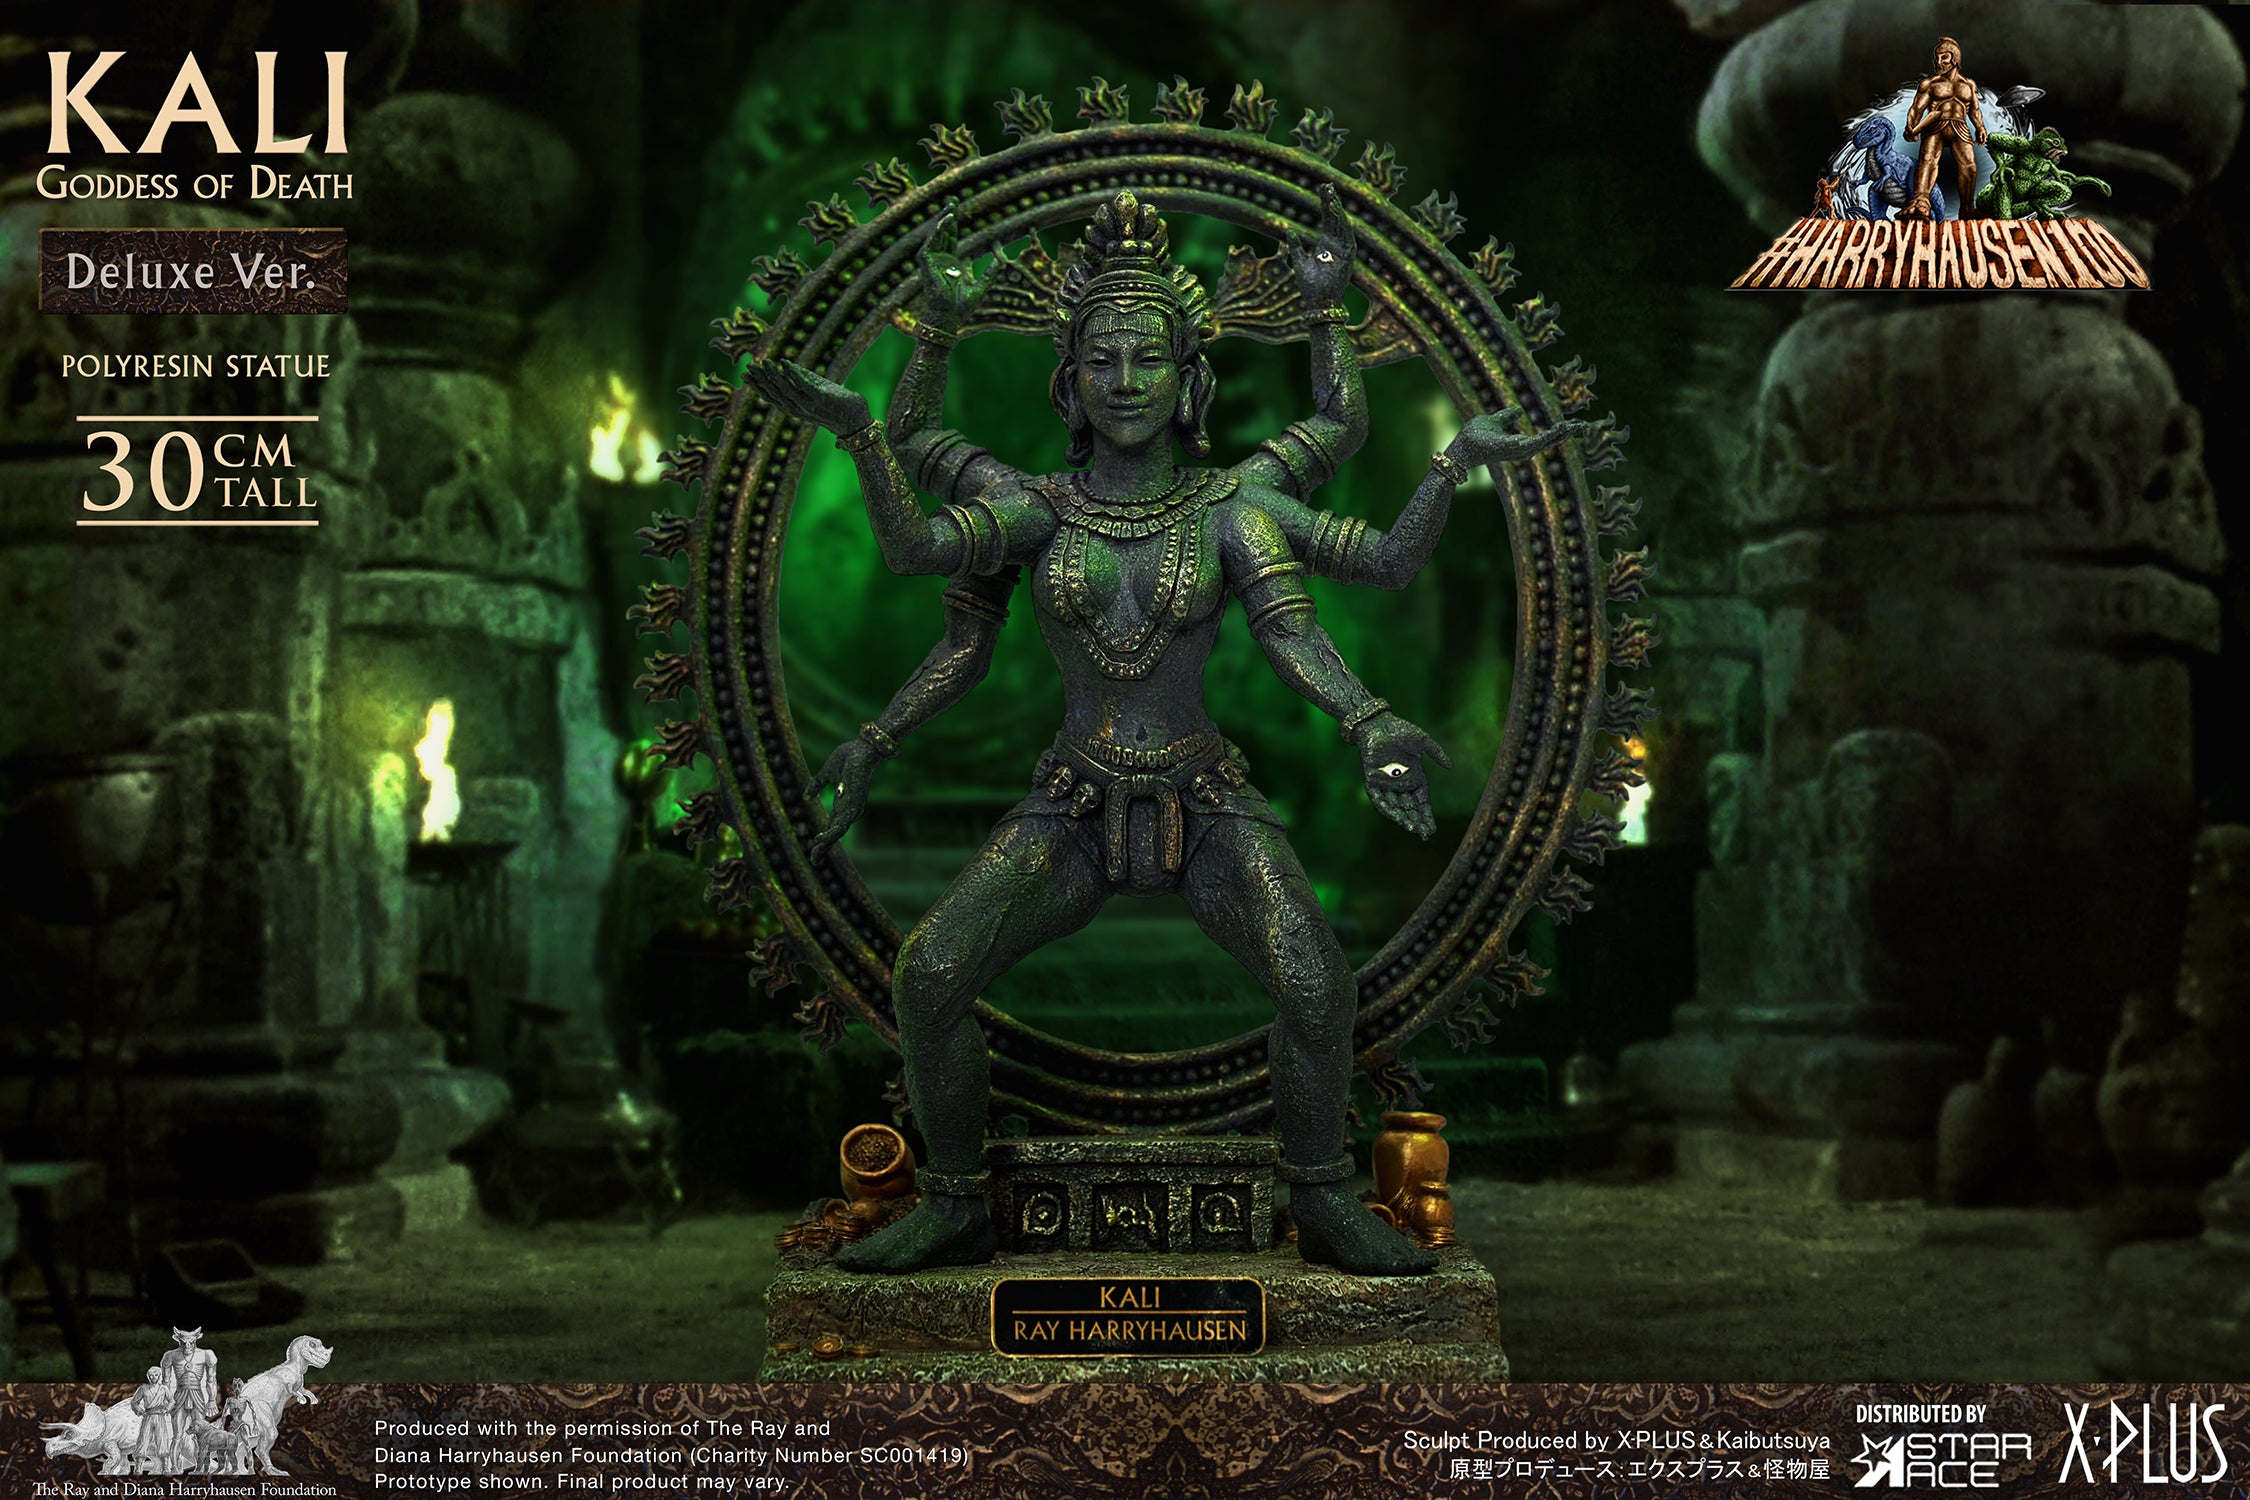 The Golden Voyage of Sinbad: Kali (Goddess of Death) Deluxe